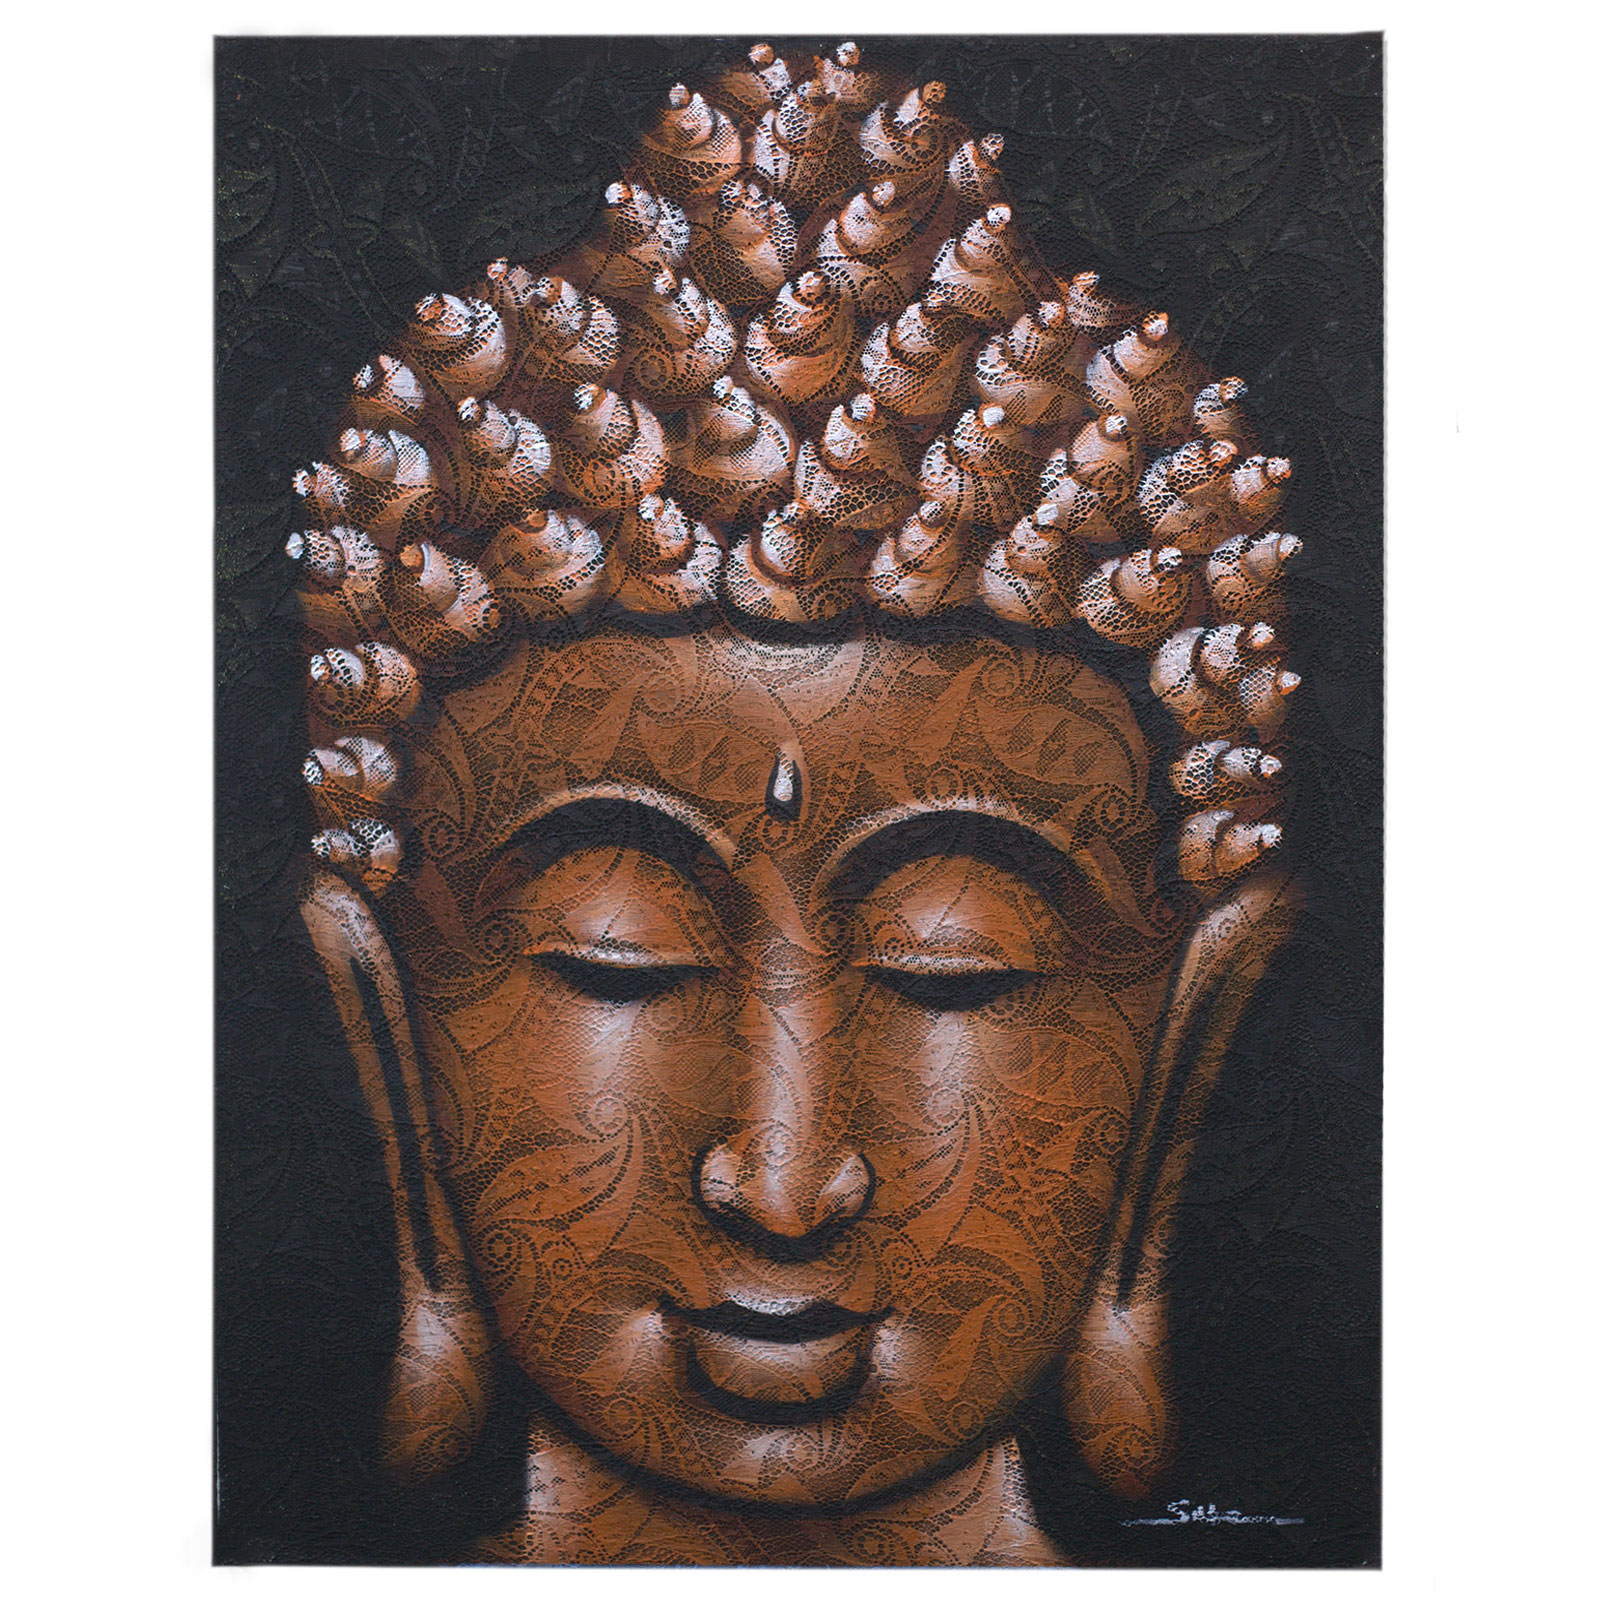 Obraz Buddhu - Detail měděného brokátu